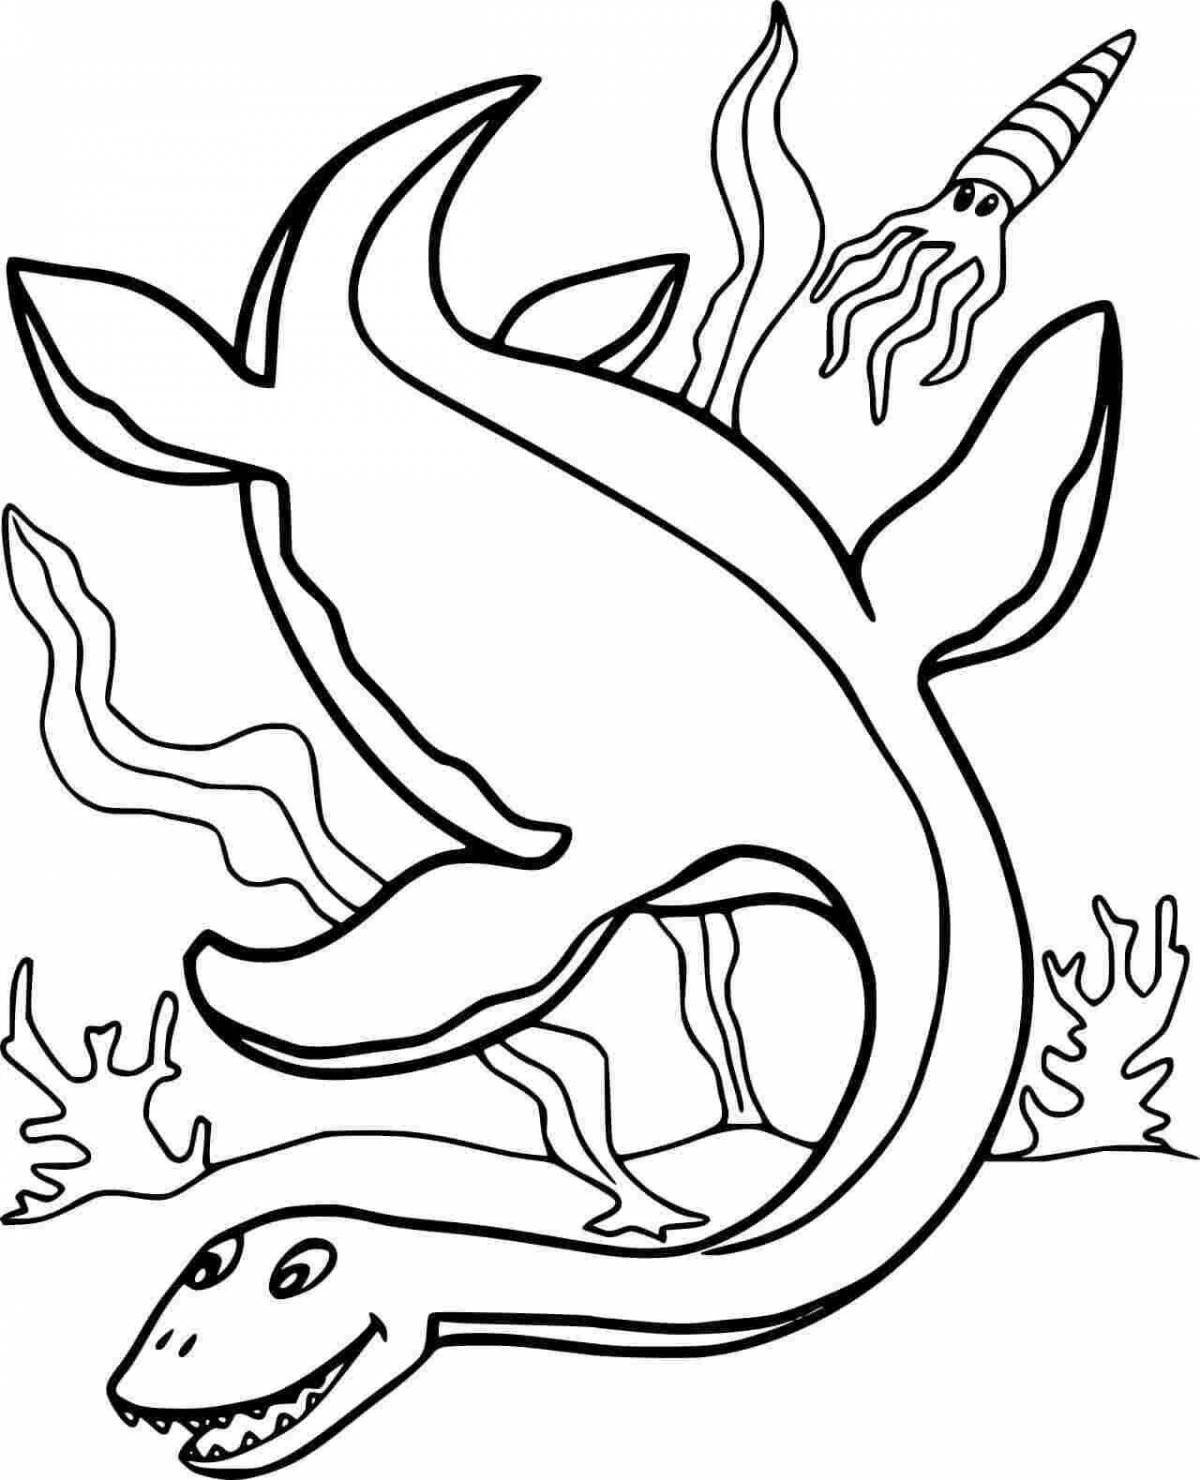 Coloring page happy underwater dinosaur